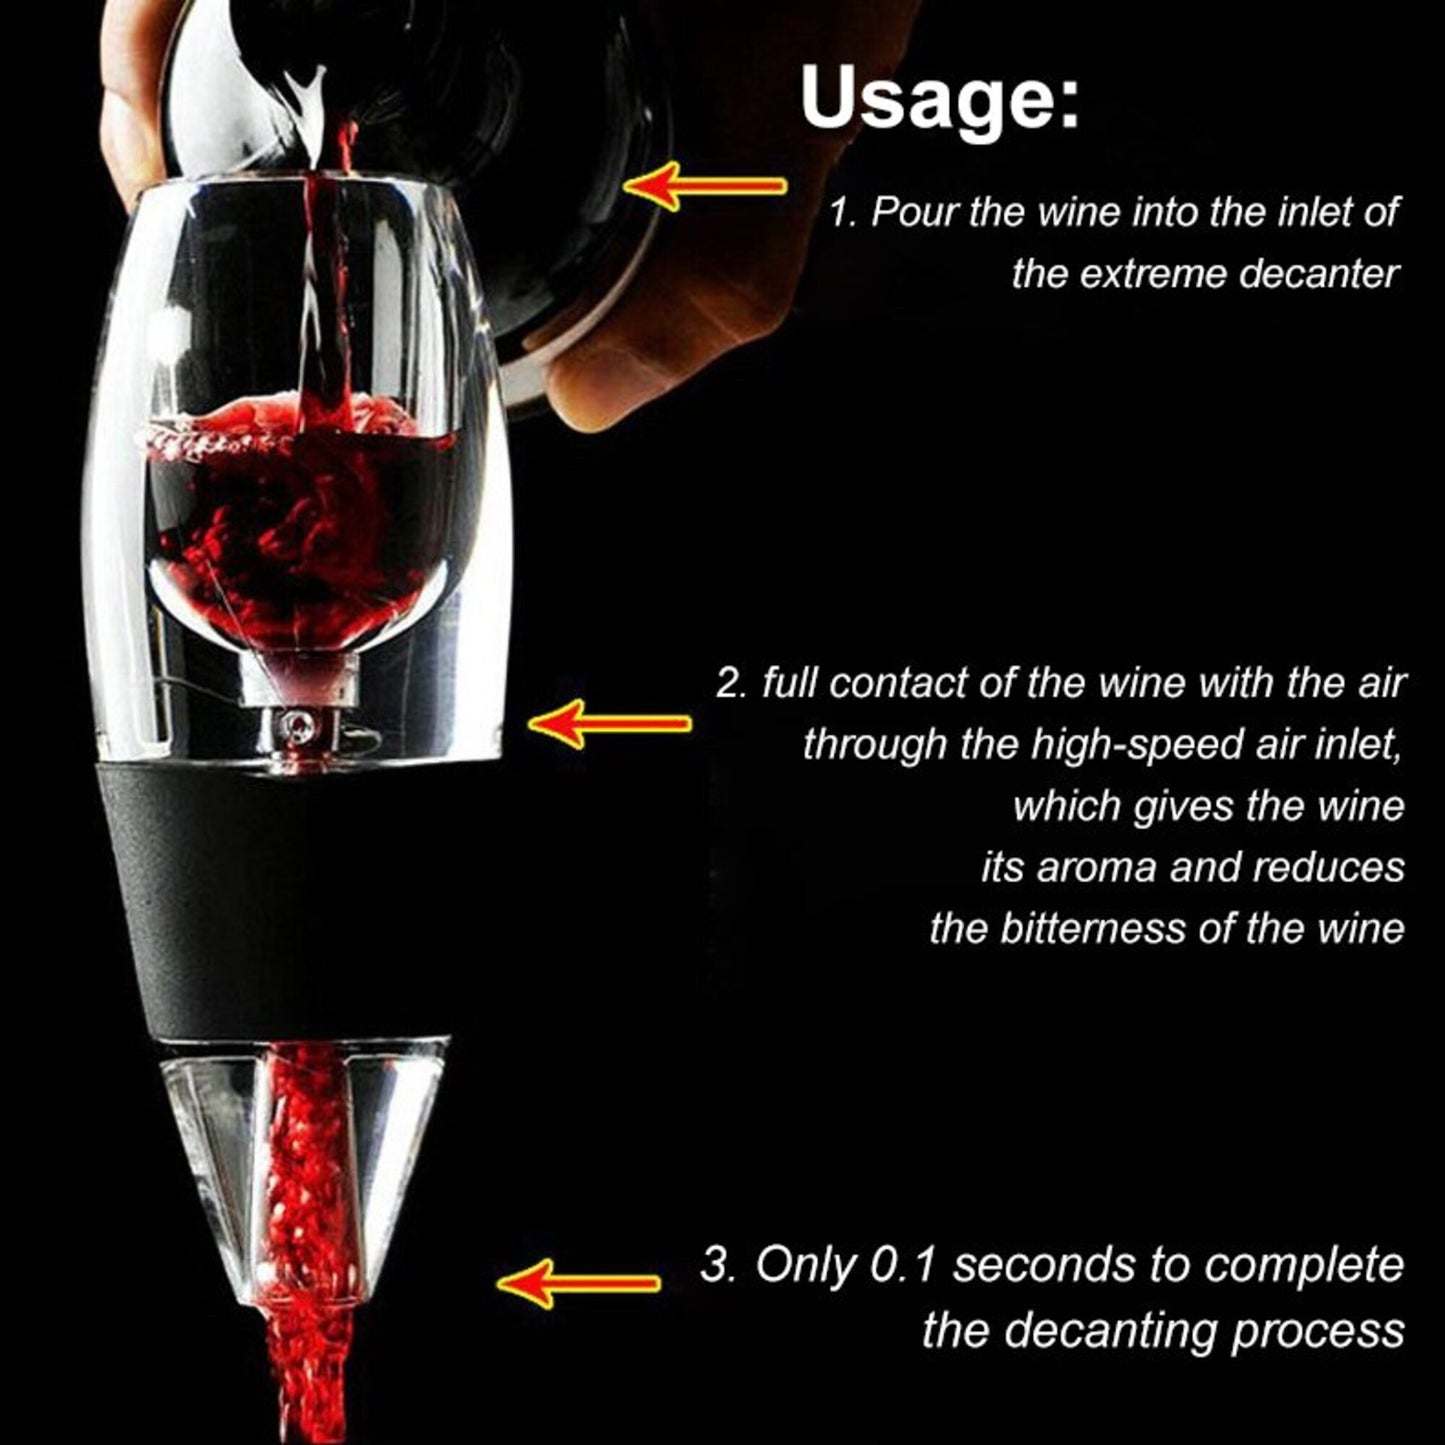 Wine Aerator Filter Decanter Essential, Aerator, Wine Accessory Wine Lover Gift